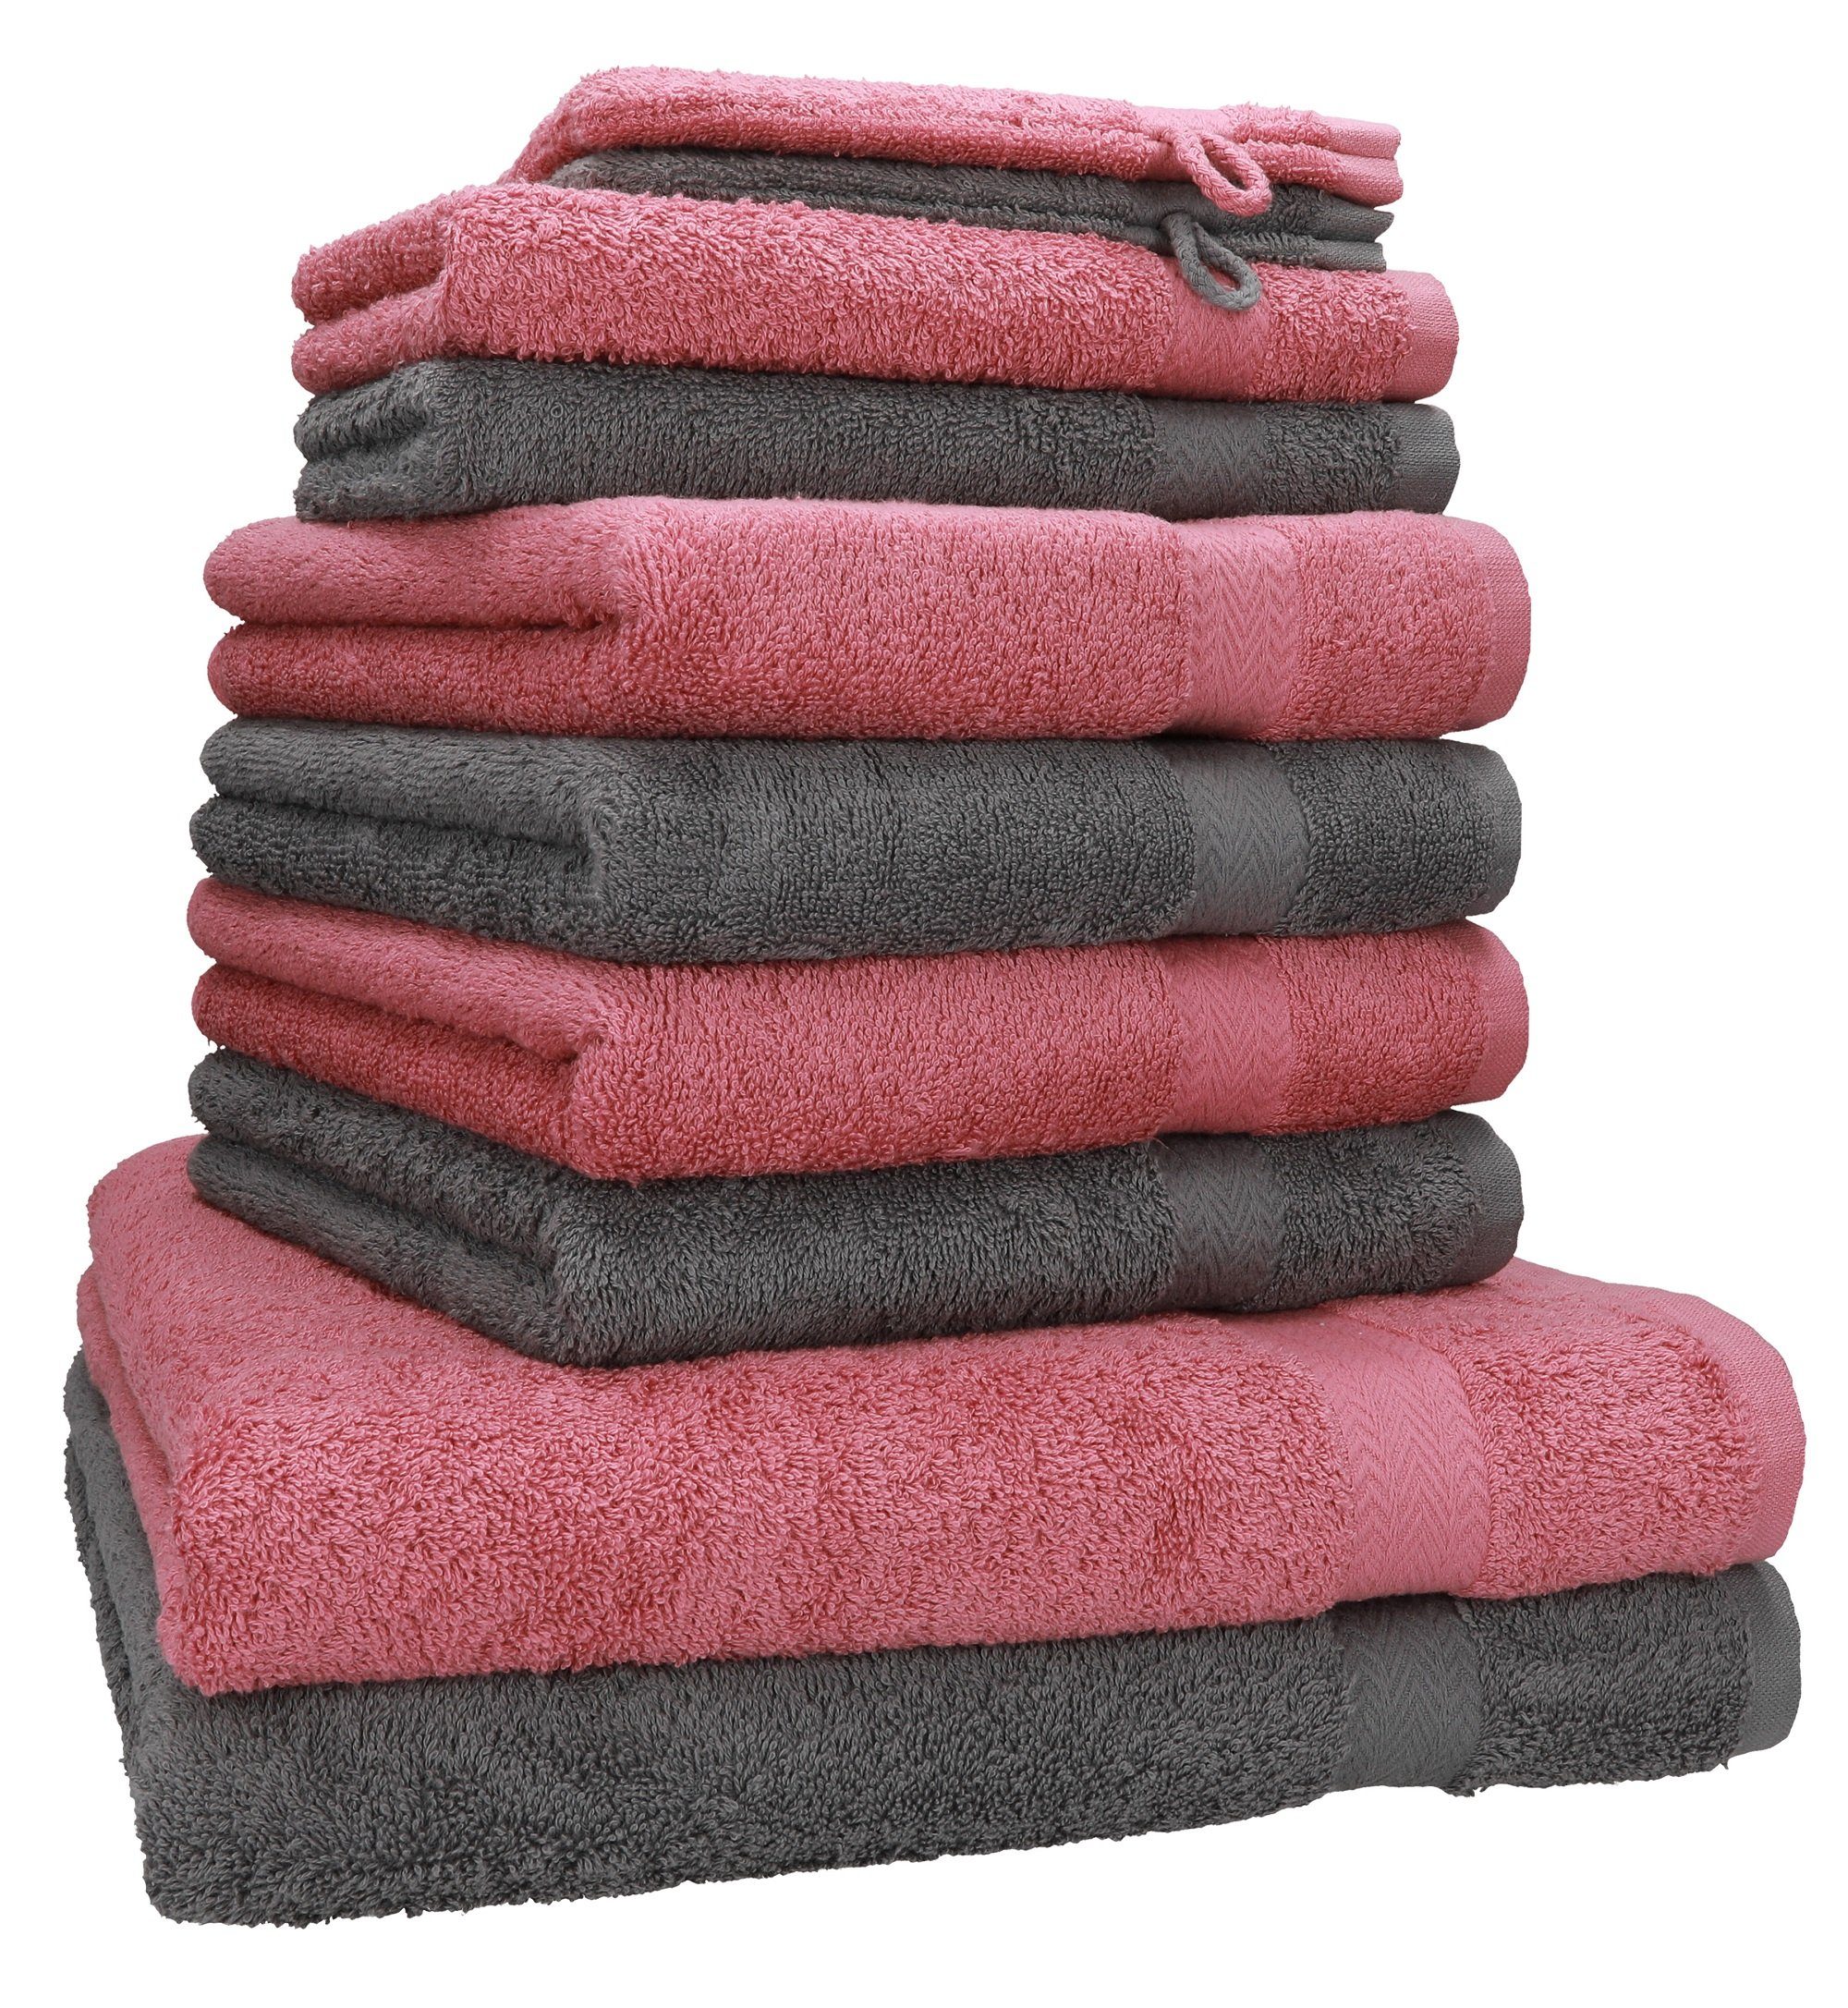 Betz Handtuch Set 10-TLG. Handtuch-Set Premium 100% Baumwolle 2 Duschtücher  4 Handtücher 2 Gästetücher 2 Waschhandschuhe Farbe Altrosa & Anthrazit,  100% Baumwolle, (10-tlg)